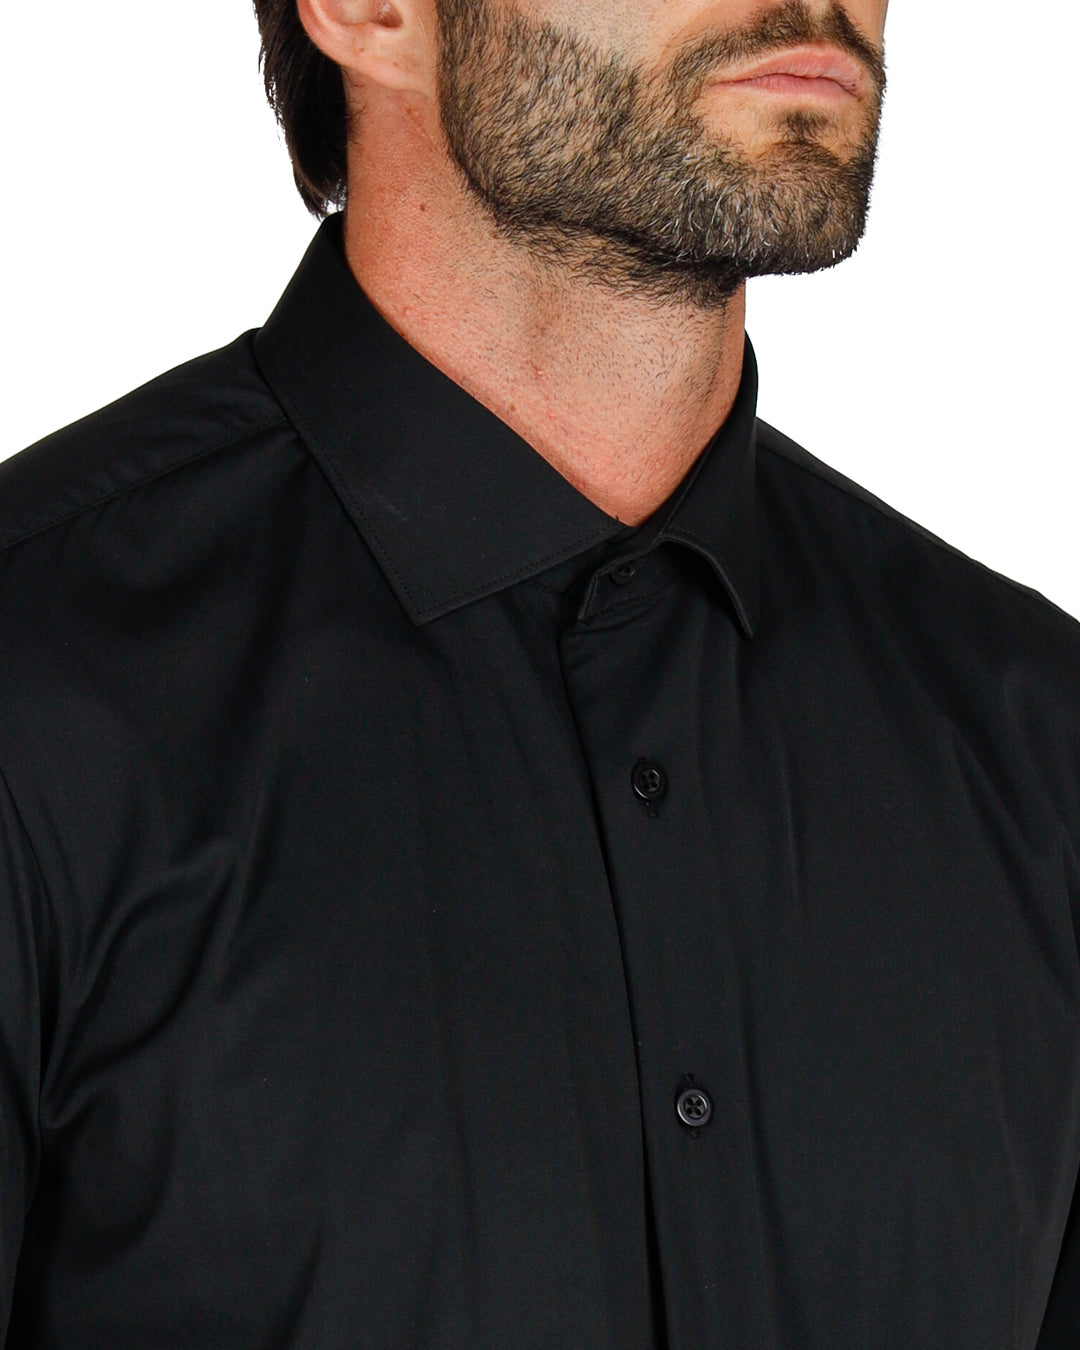 Teck - classic black technical shirt